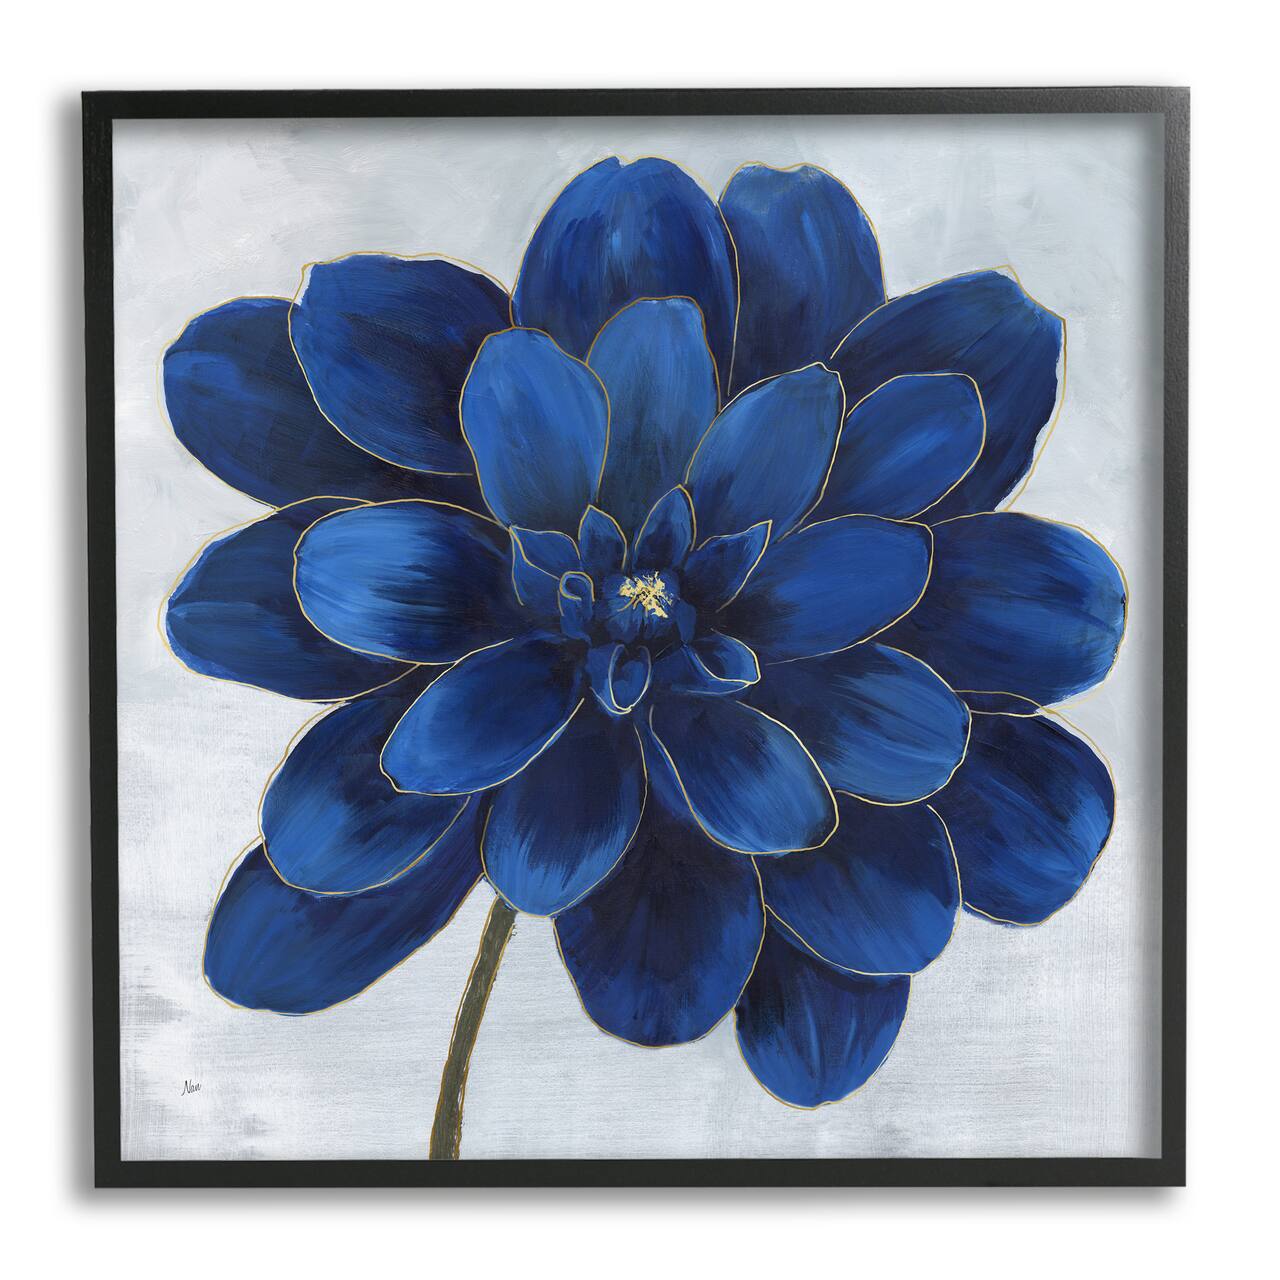 Stupell Industries Modern Deep Blue Floral Carnation Flower Petal Outline Framed Wall Art